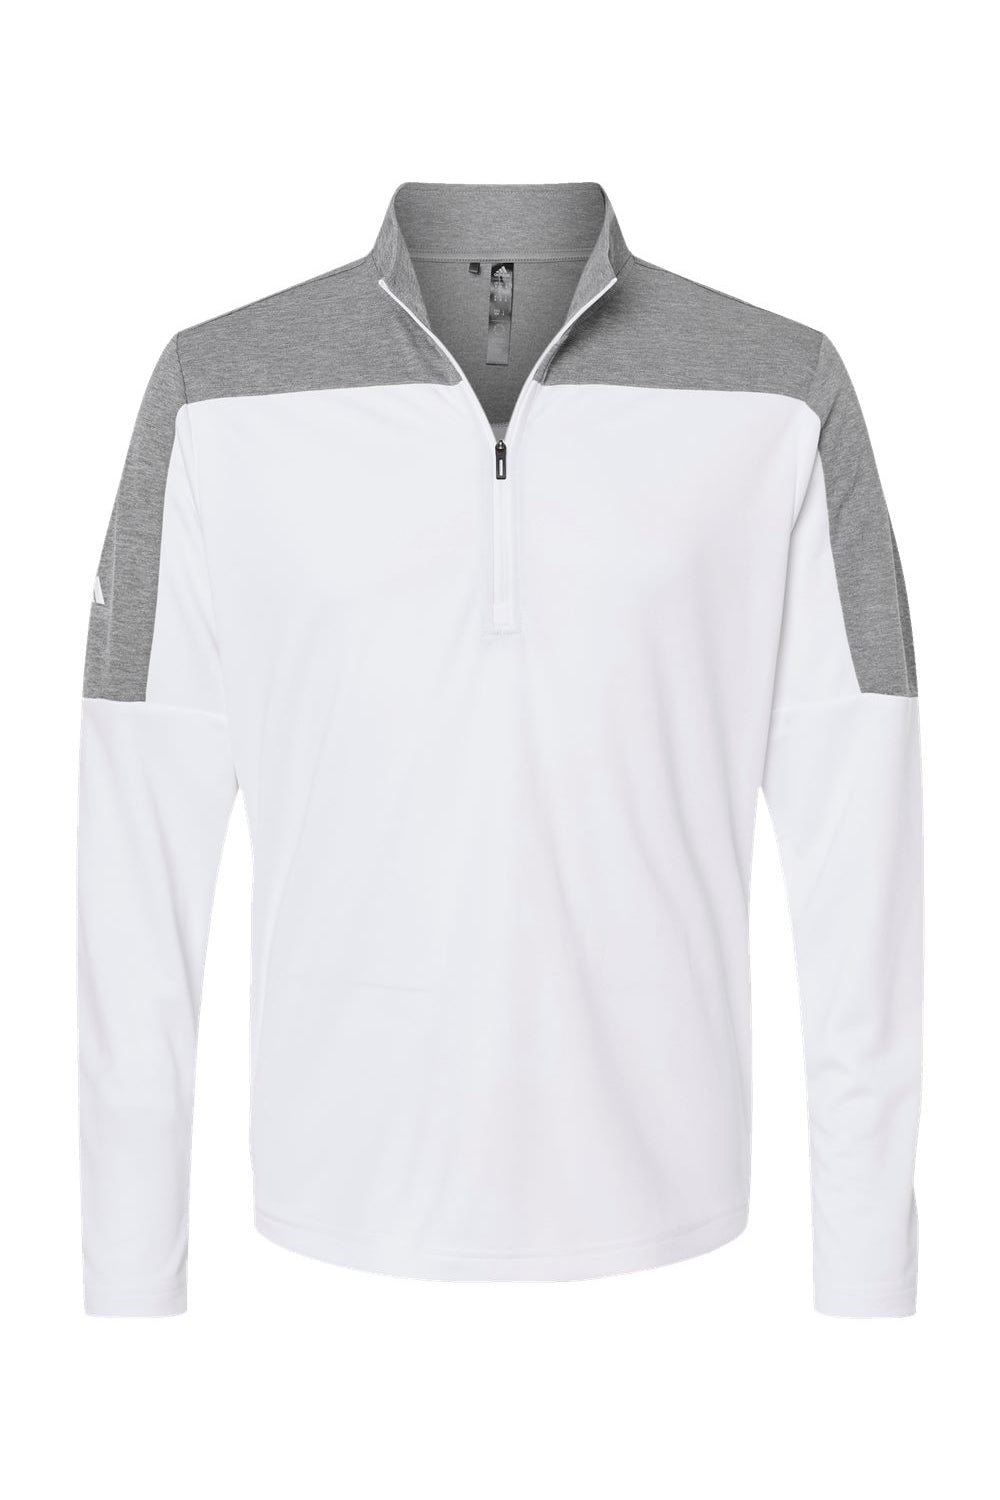 Adidas A552 Mens Moisture Wicking 1/4 Zip Sweatshirt White/Grey Melange Flat Front